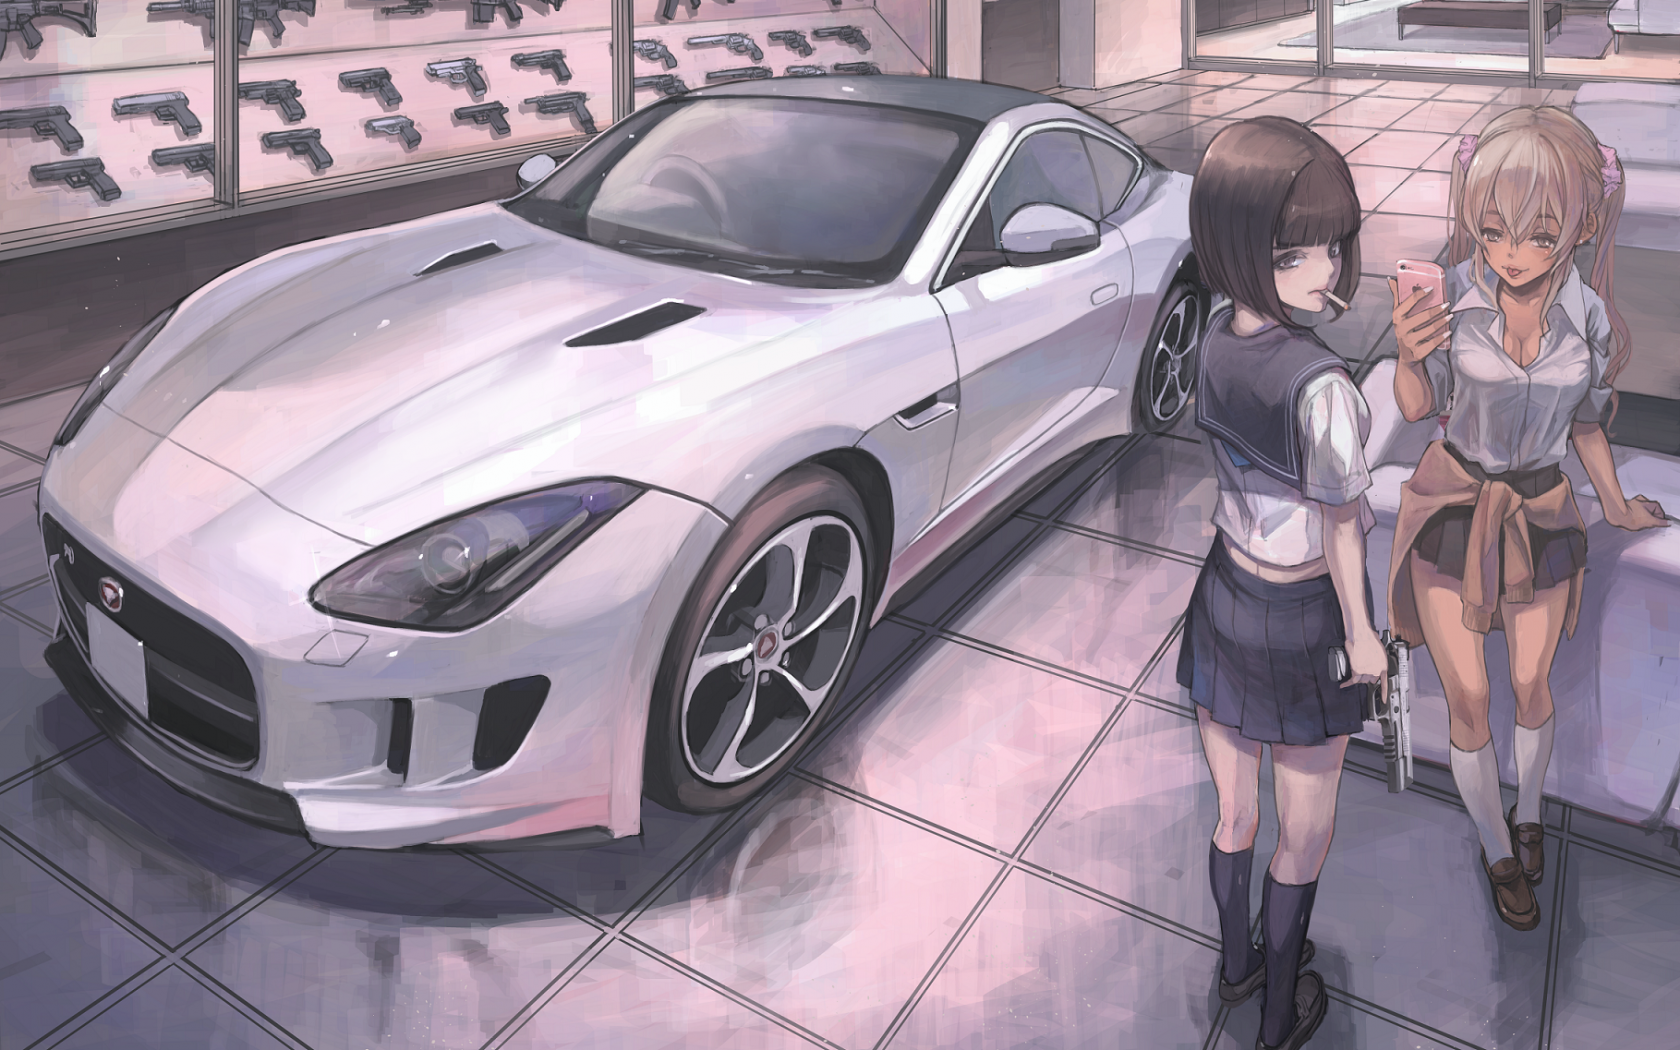 Download 1680x1050 Anime Sport Car, Anime Girls, School Girls, Weapon Wallpaper for MacBook Pro 15 inch